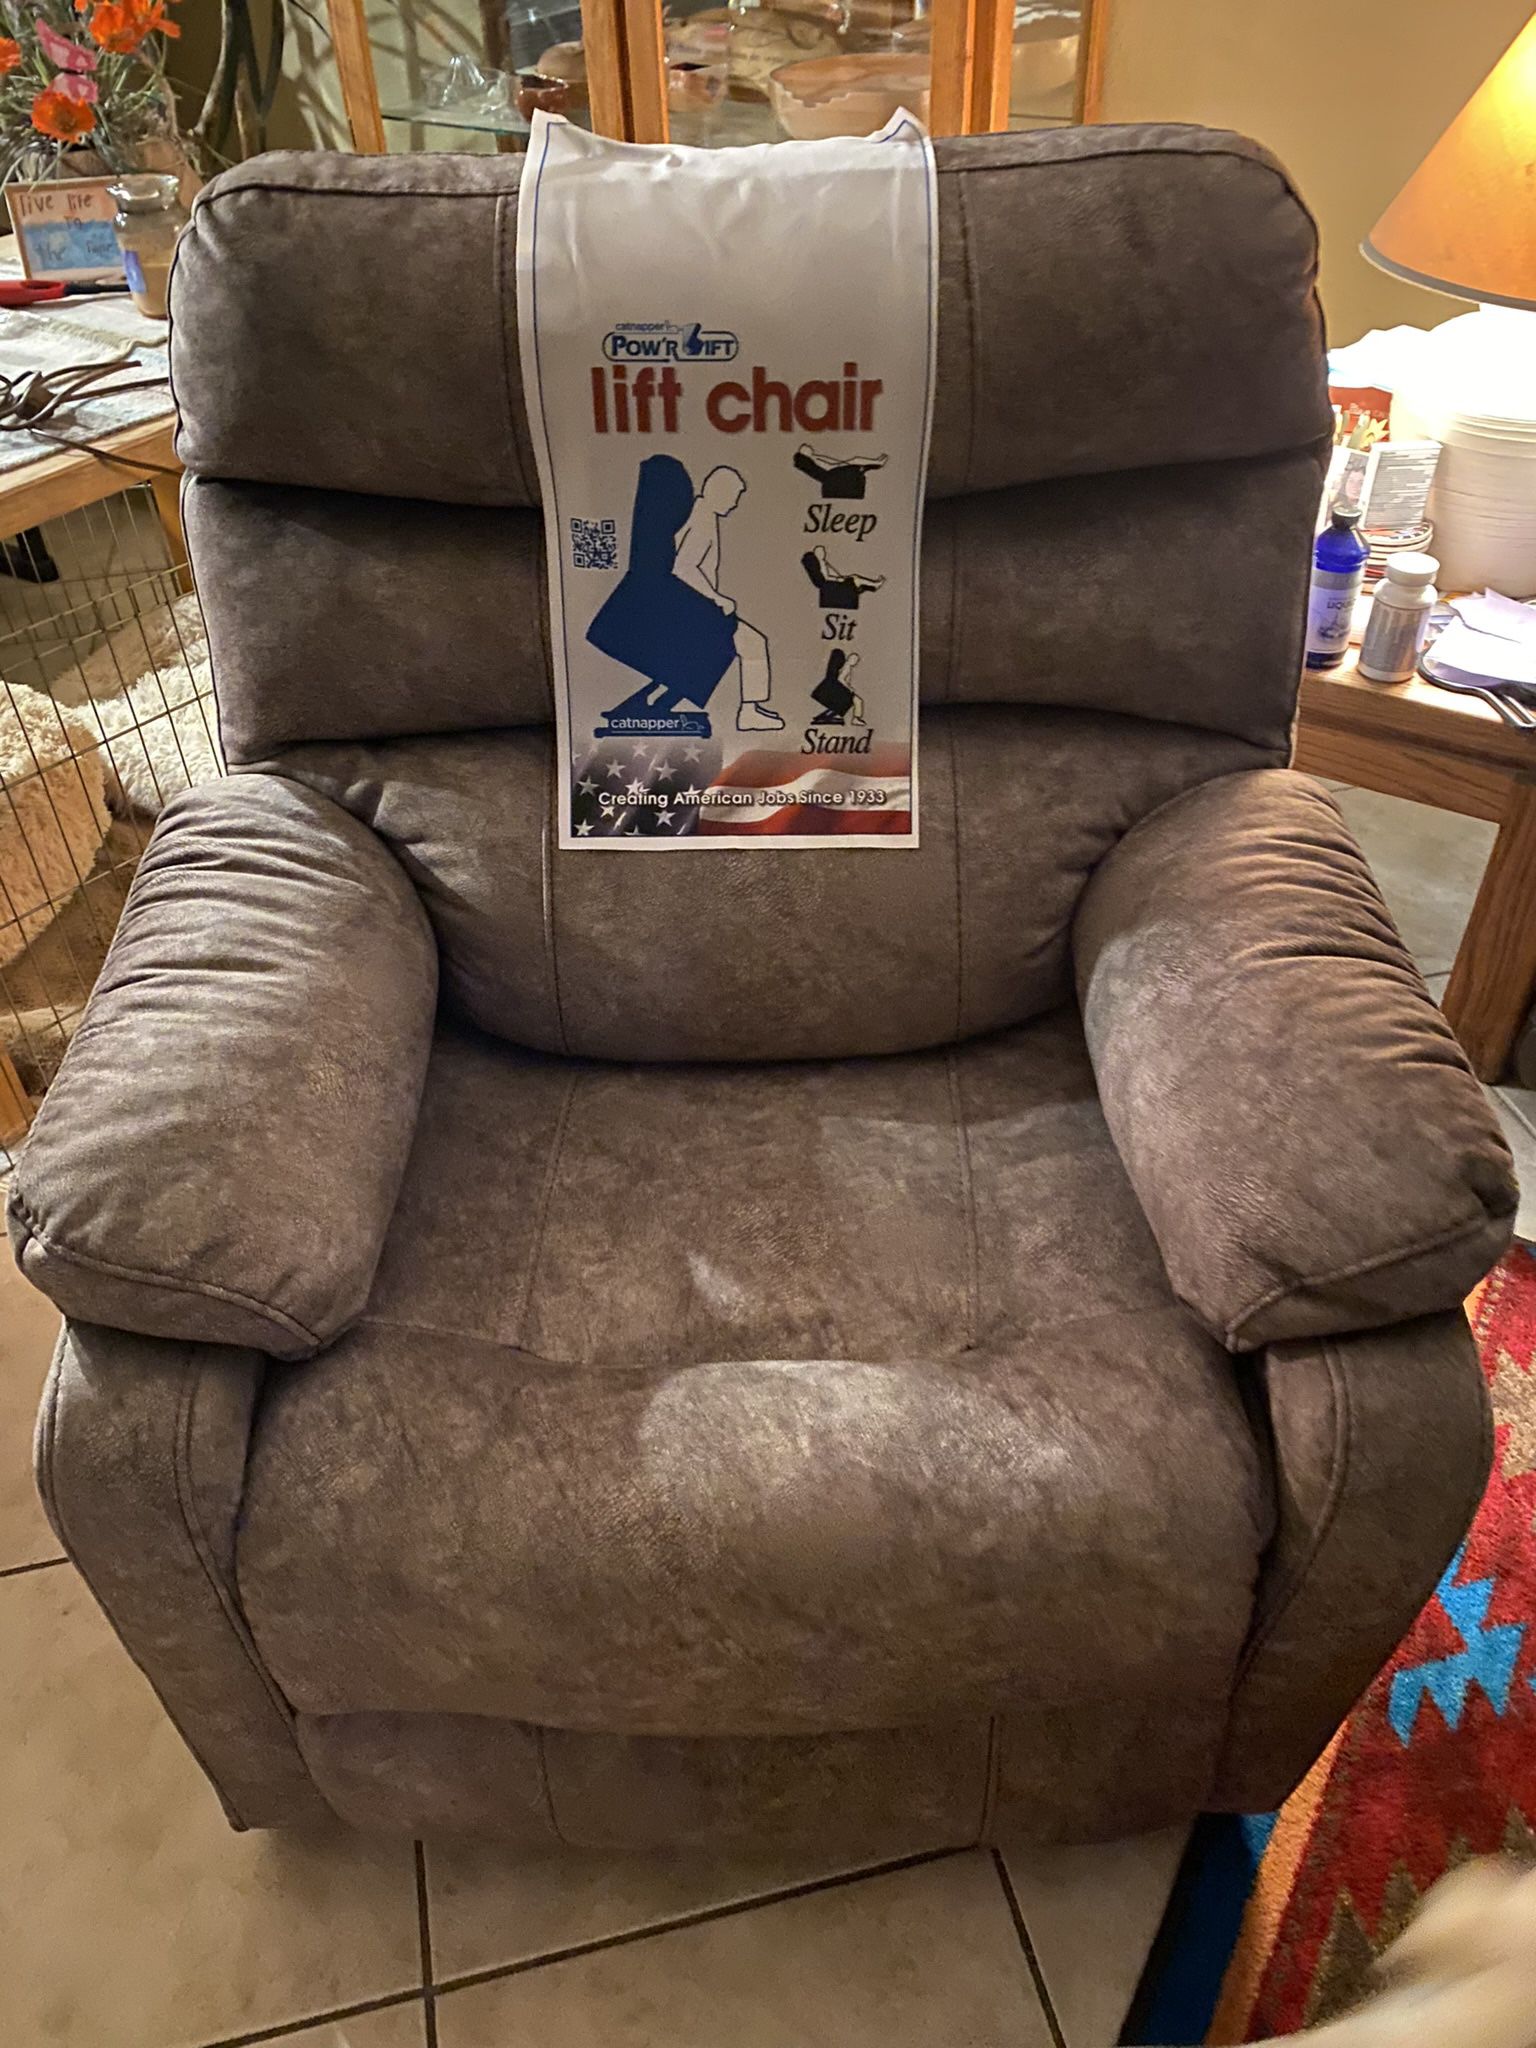 Lift Chair